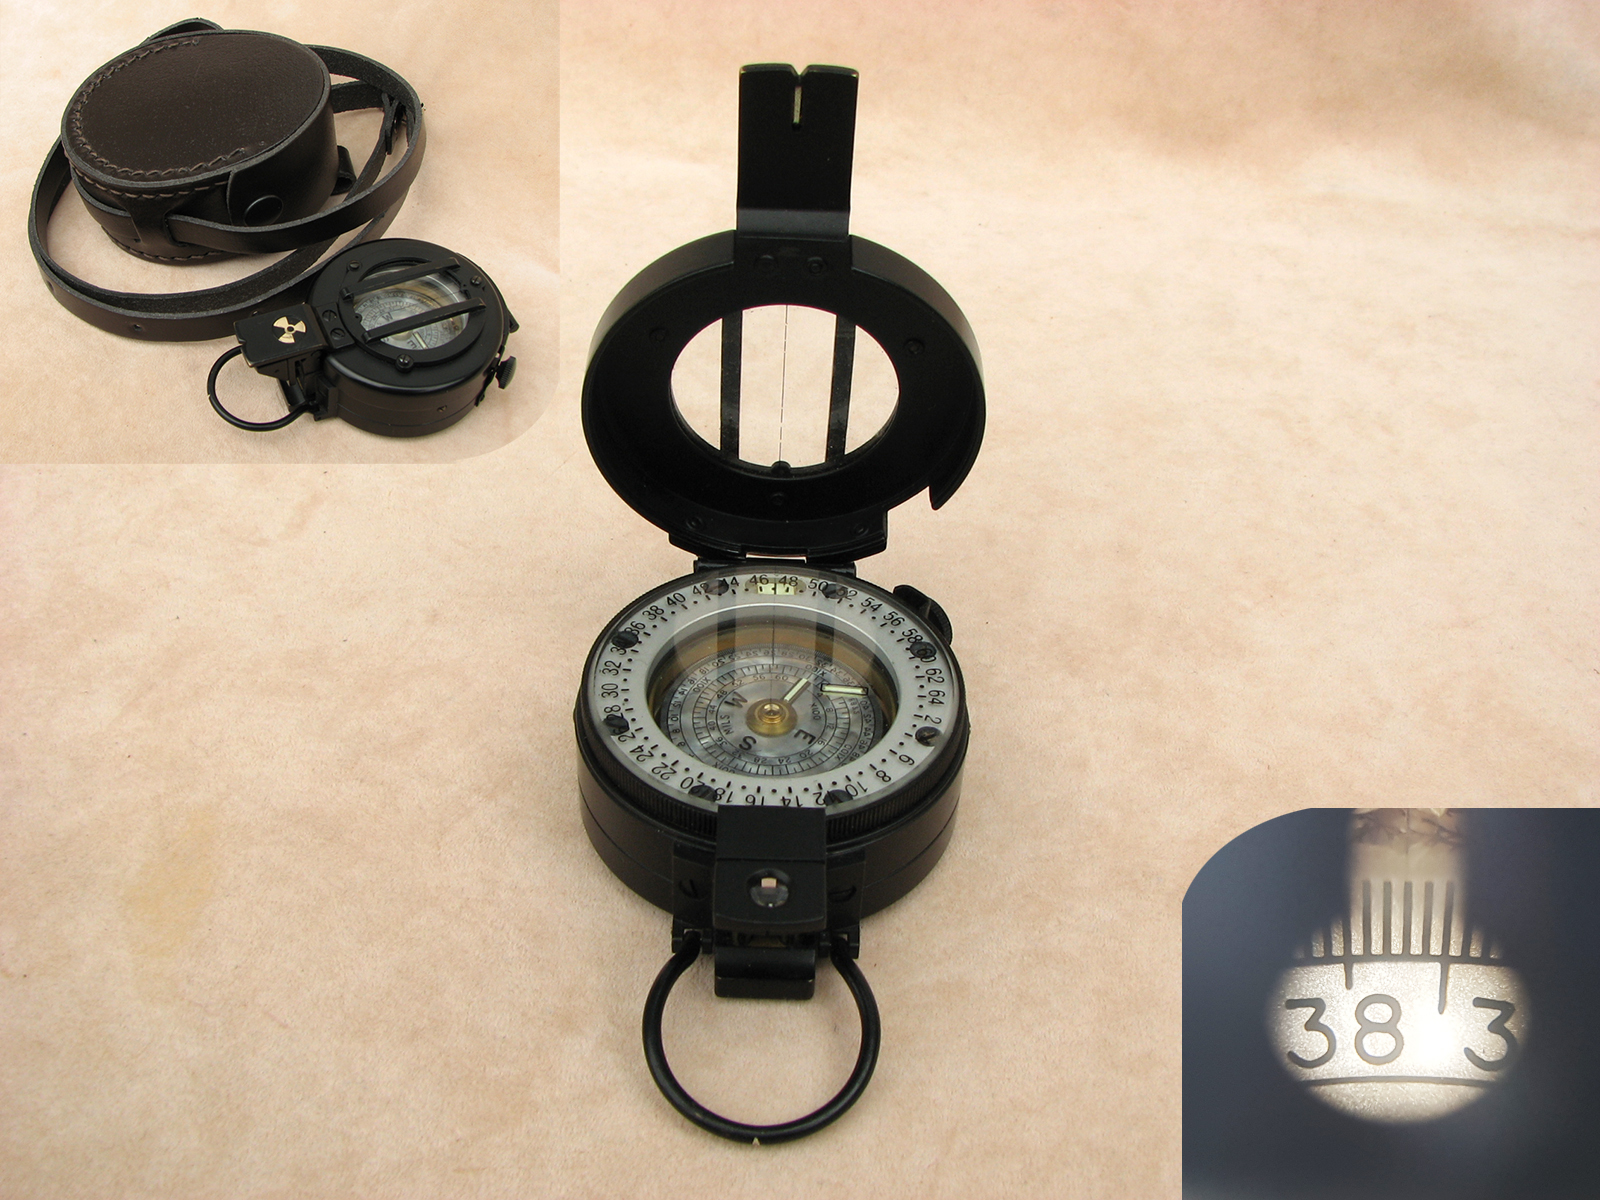 Francis Barker M-73 prismatic compass, Mils version with case